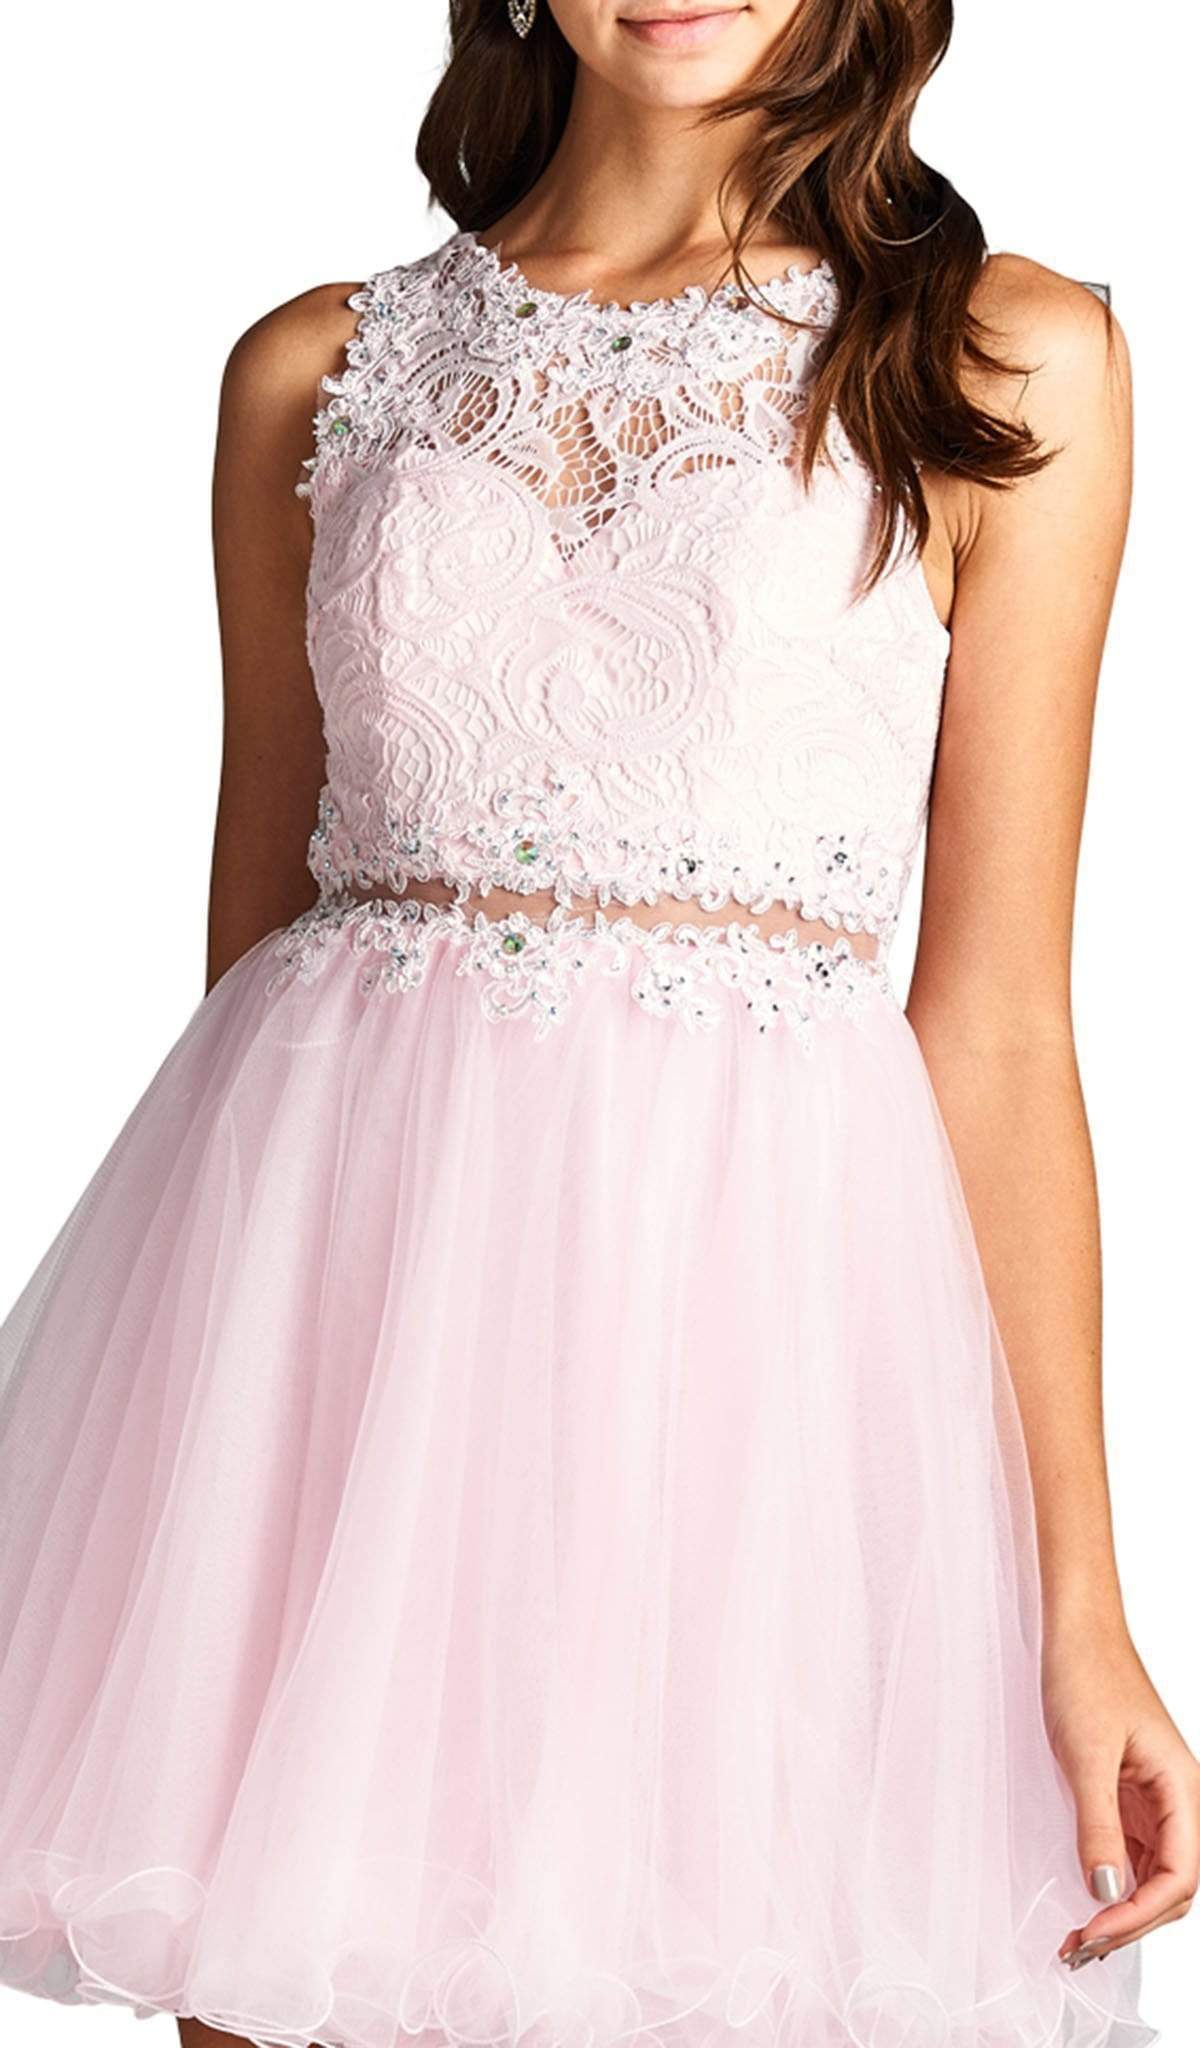 Jeweled Lace Illusion Jewel A-line Evening Dress Dress